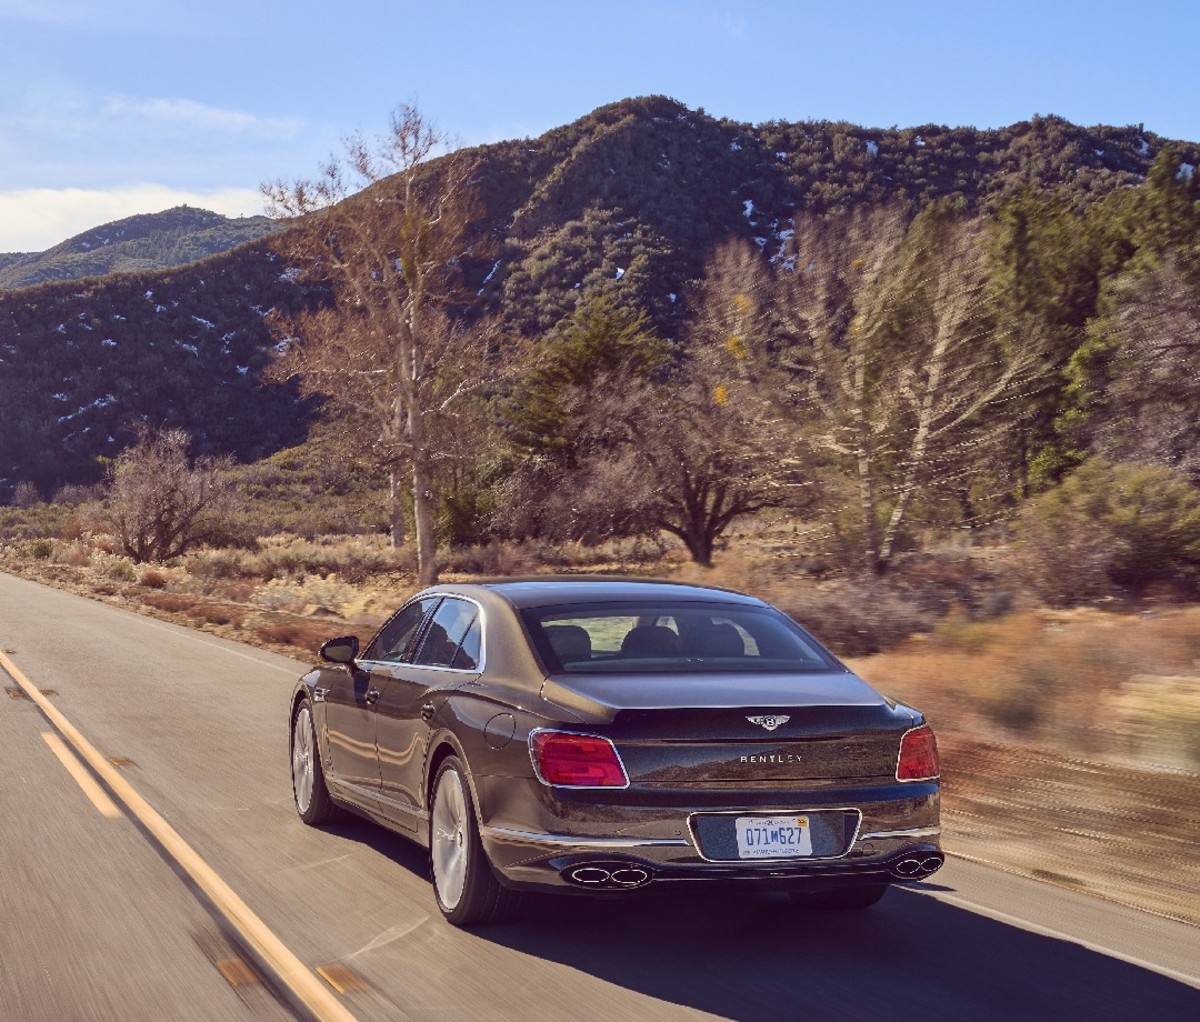 Black 2022 Bentley Flying Spur Hybrid driving on desert road, rear view